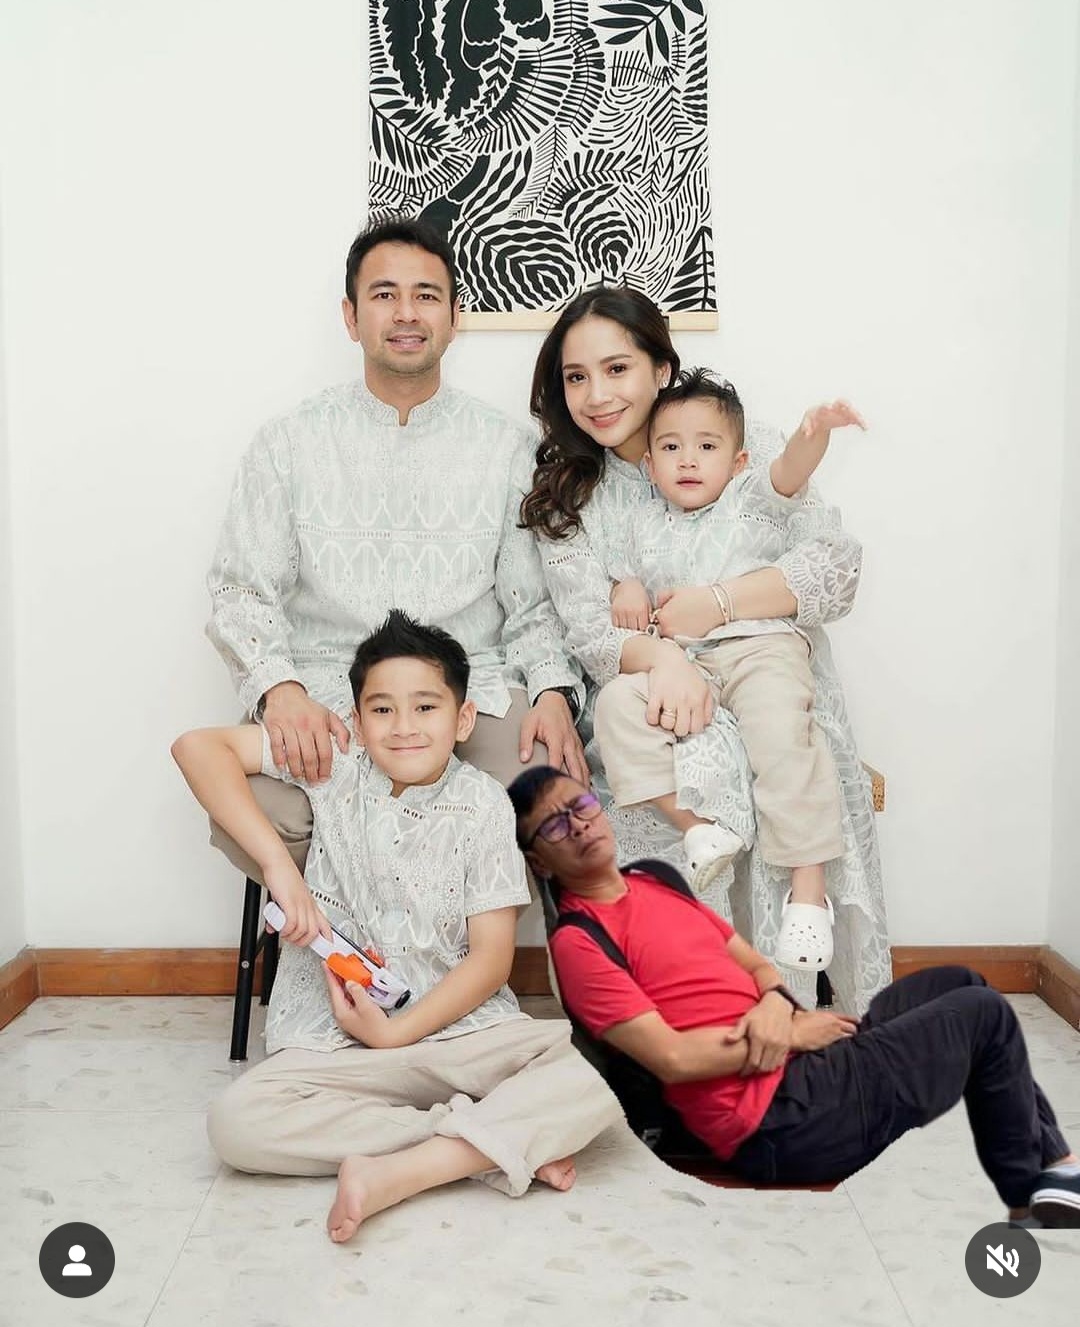 Trend Foto Masuk Keluarga Raffi Ahmad, Ulah Grup Musik Project Pop Bikin Netizen Tergelitik